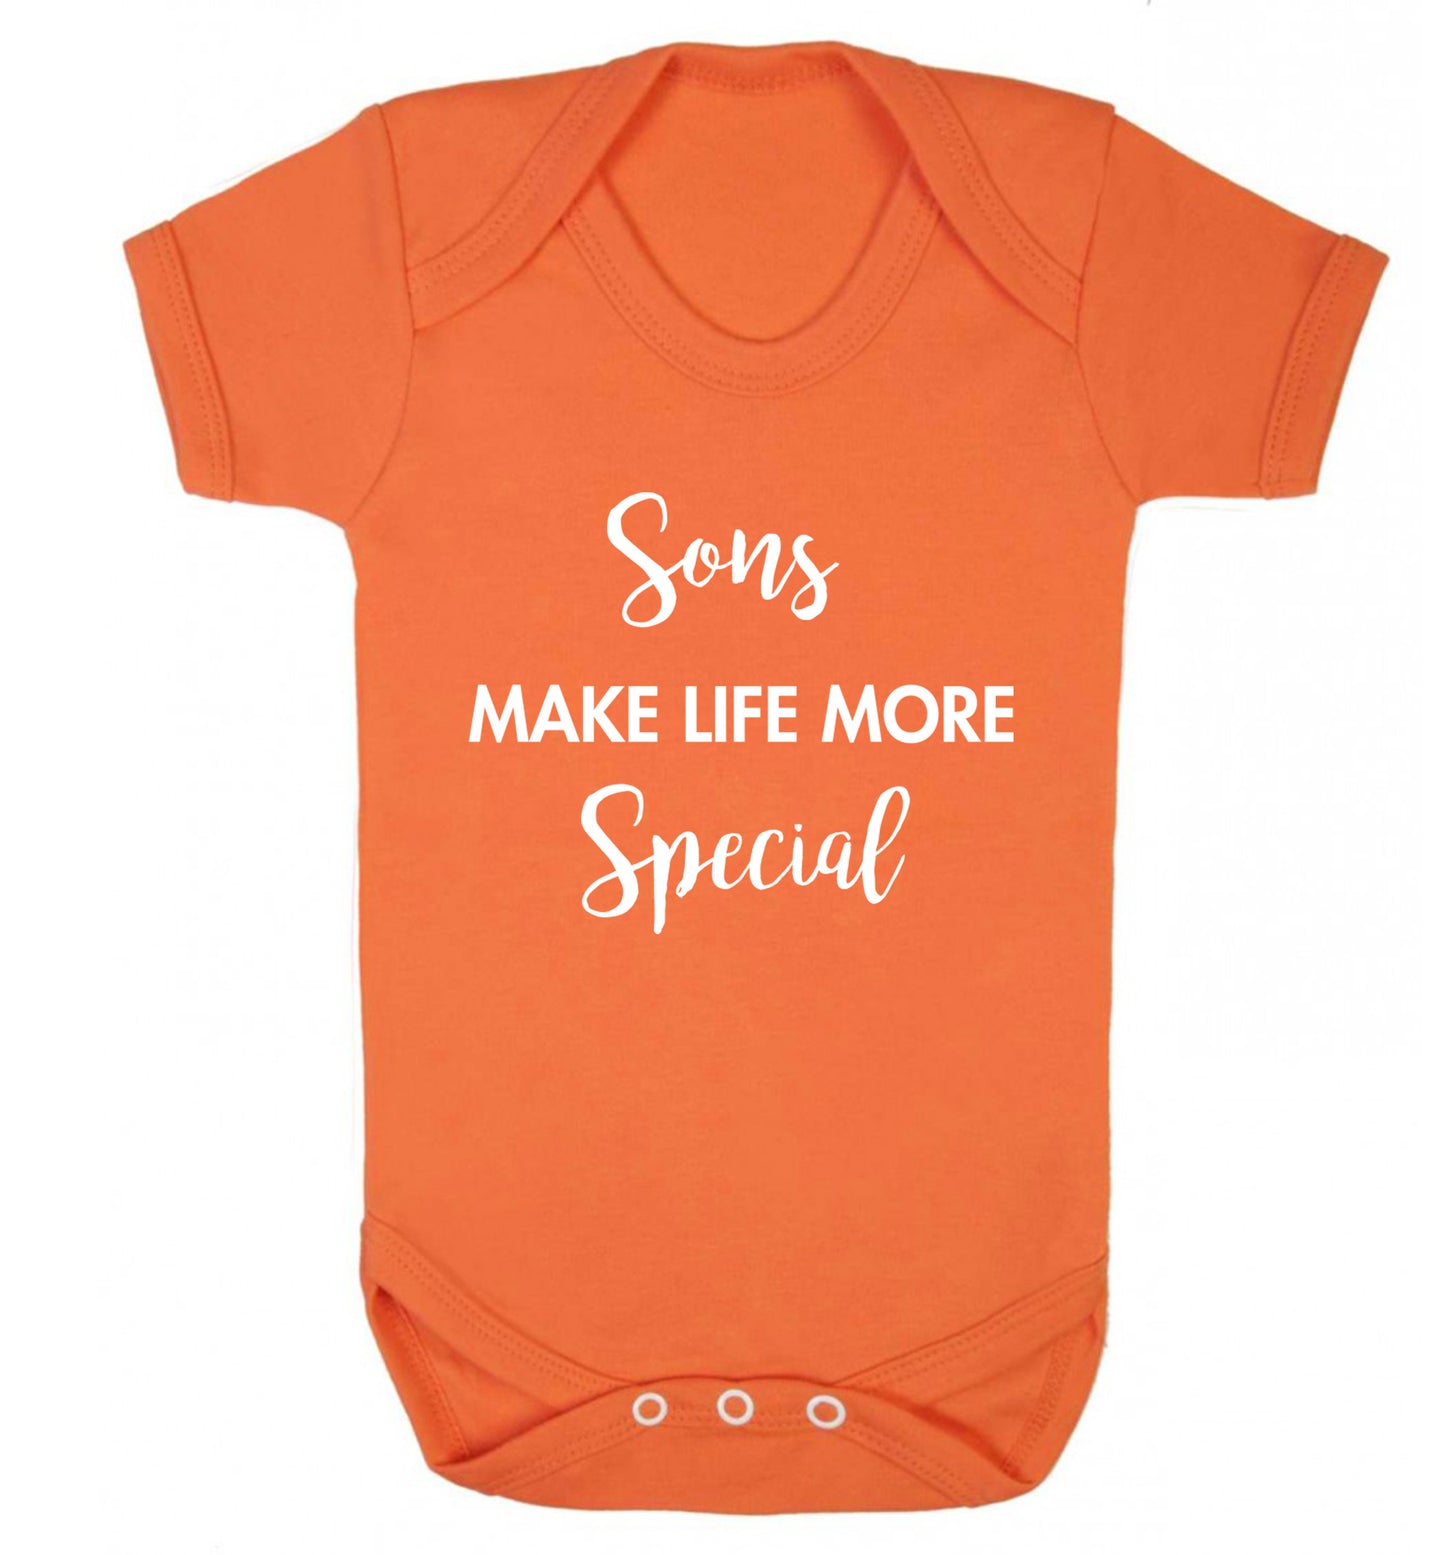 Sons make life more special Baby Vest orange 18-24 months